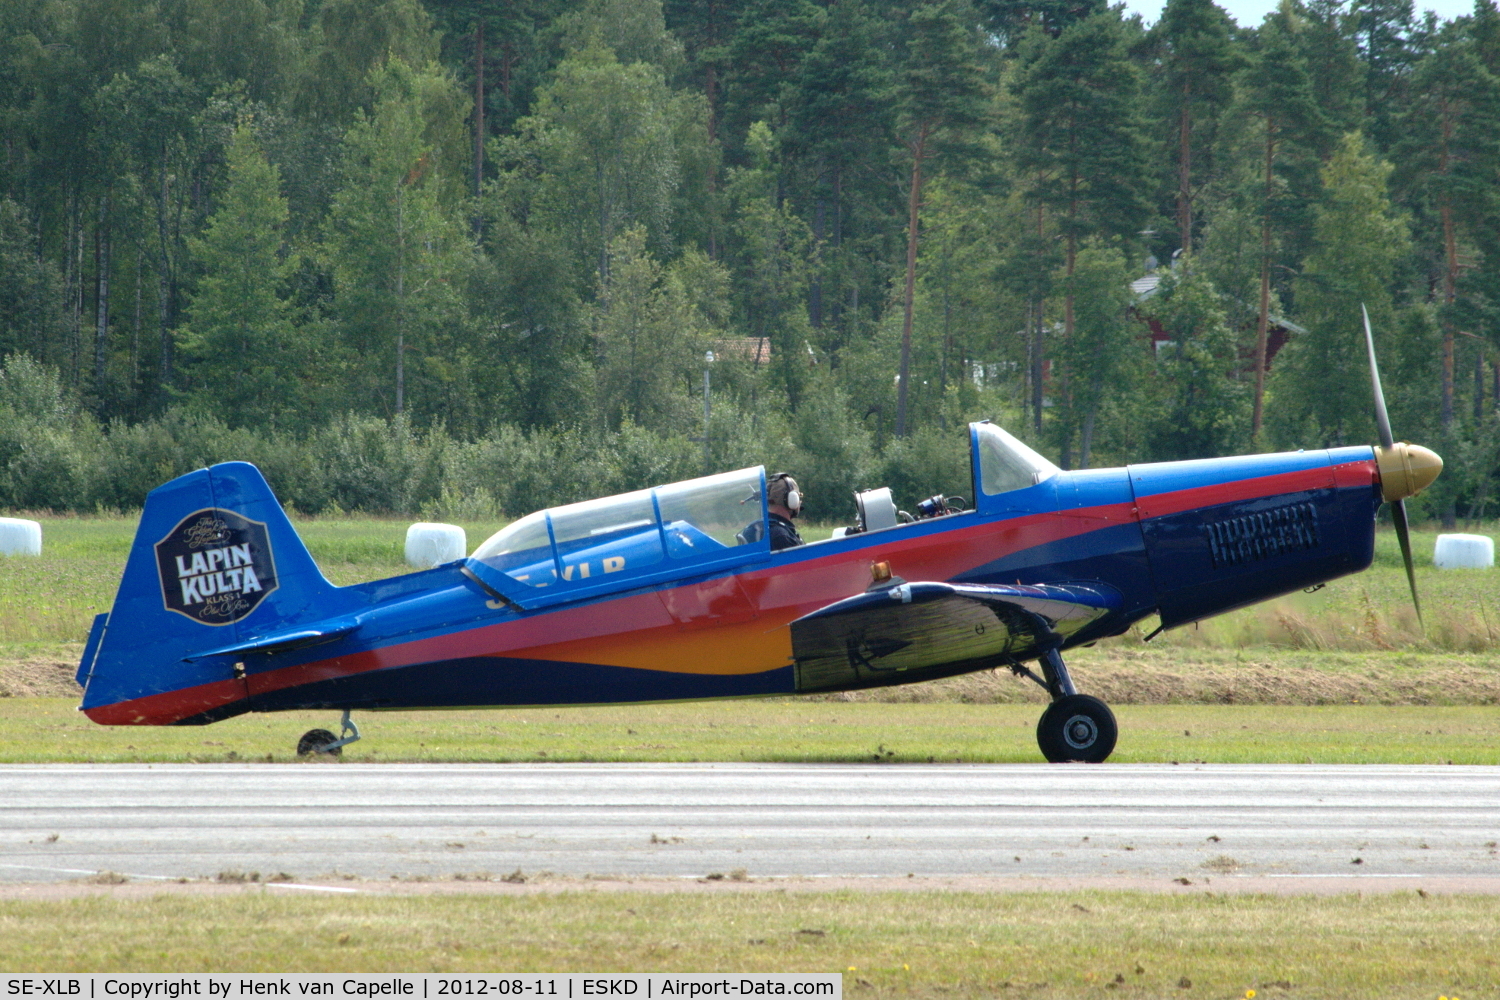 SE-XLB, 1970 Zlin Z-526F Trener Master C/N 1114-771, Zlin Z-526F taxying at Dala-Järna airfield, Sweden.